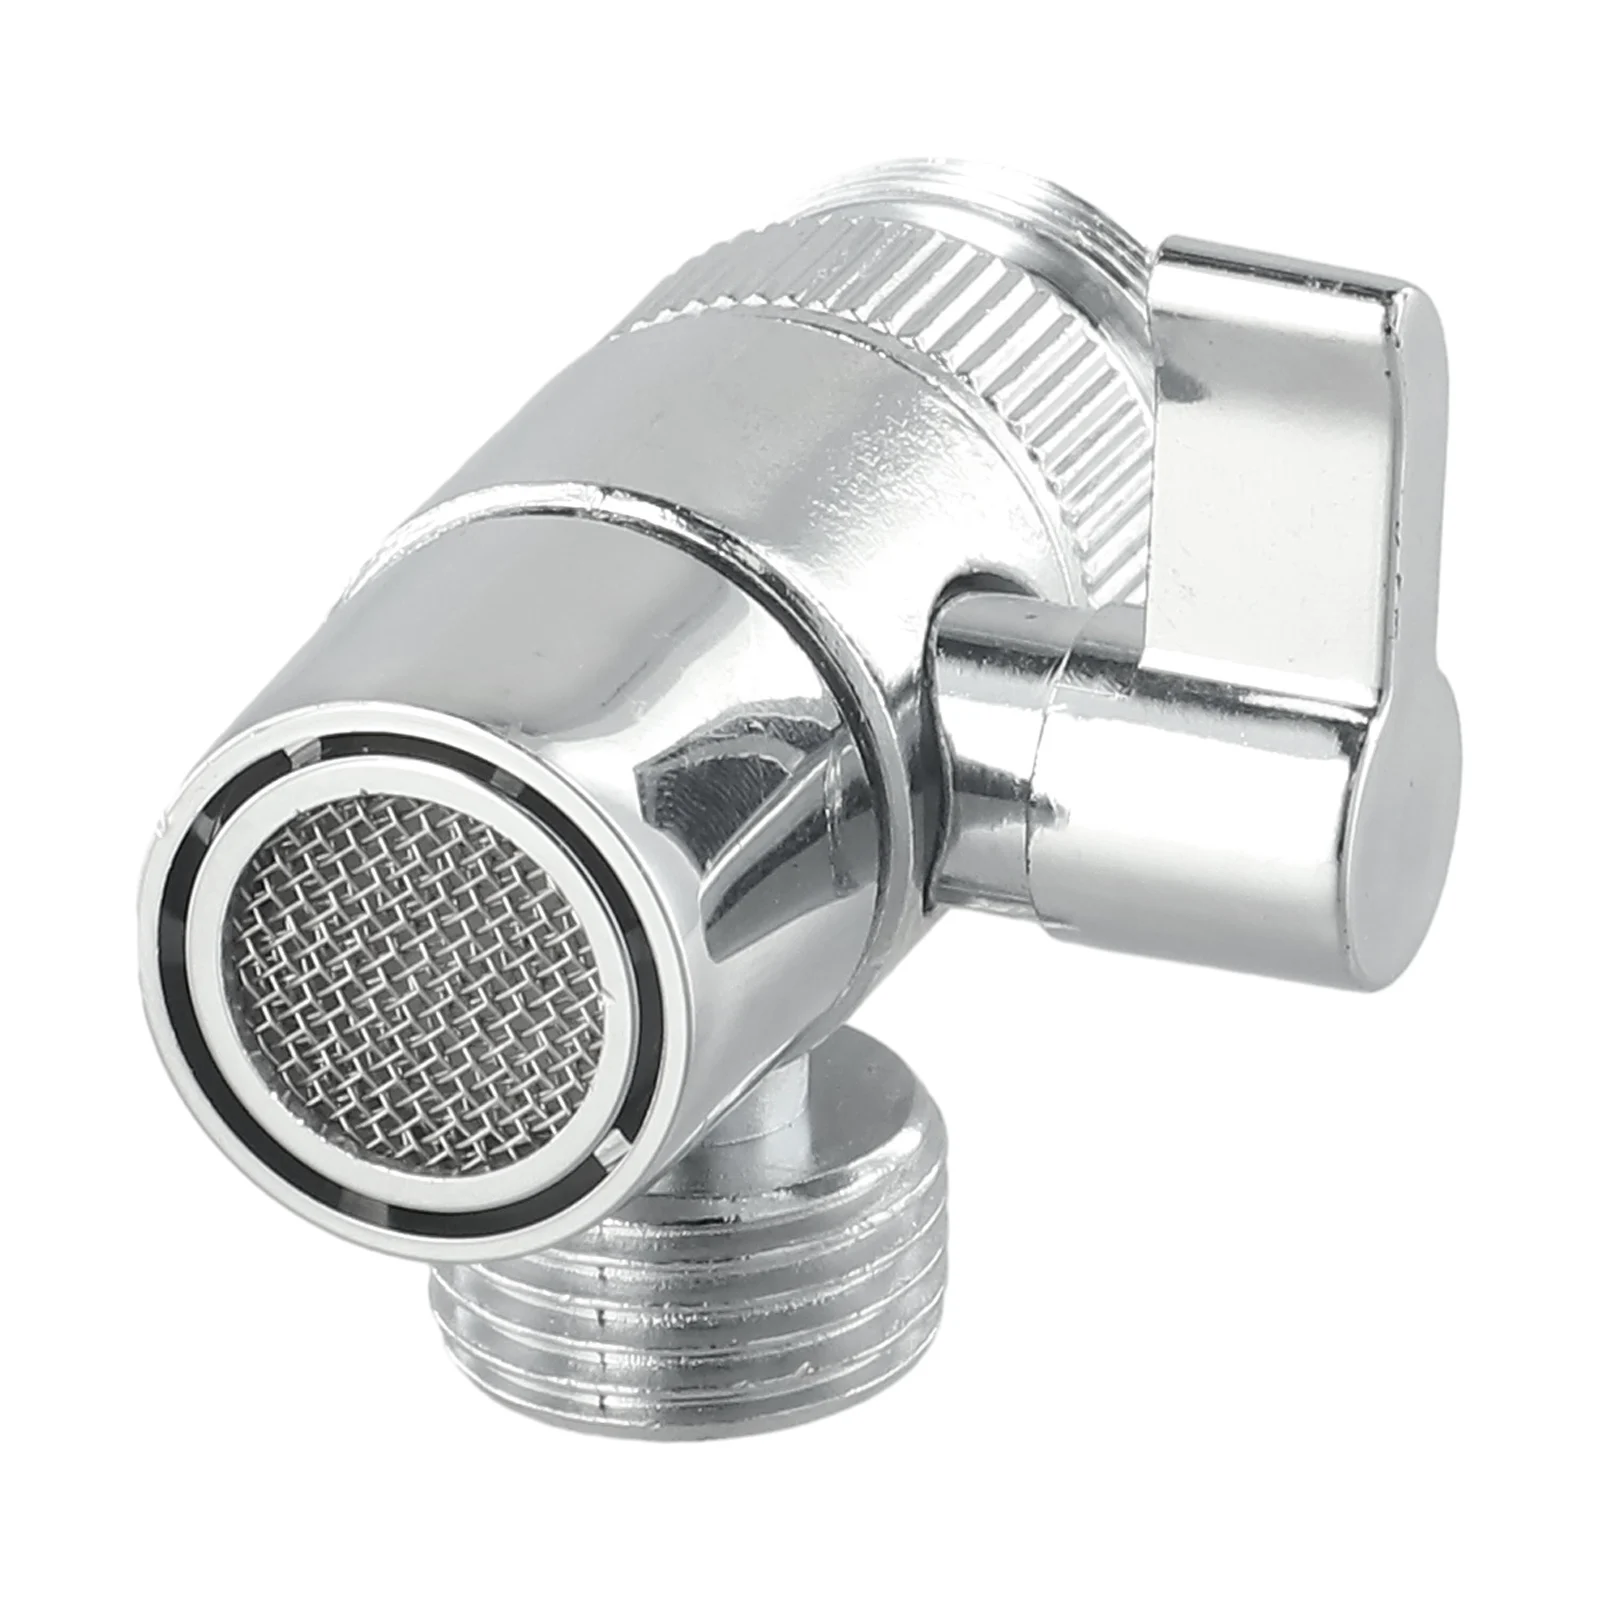 

1pcs 3-Way Diverter Valve Water Tap Connector Faucet Adapter Kitchen Sink Splitter For Toilet Bidet Shower Bathroom Accessories